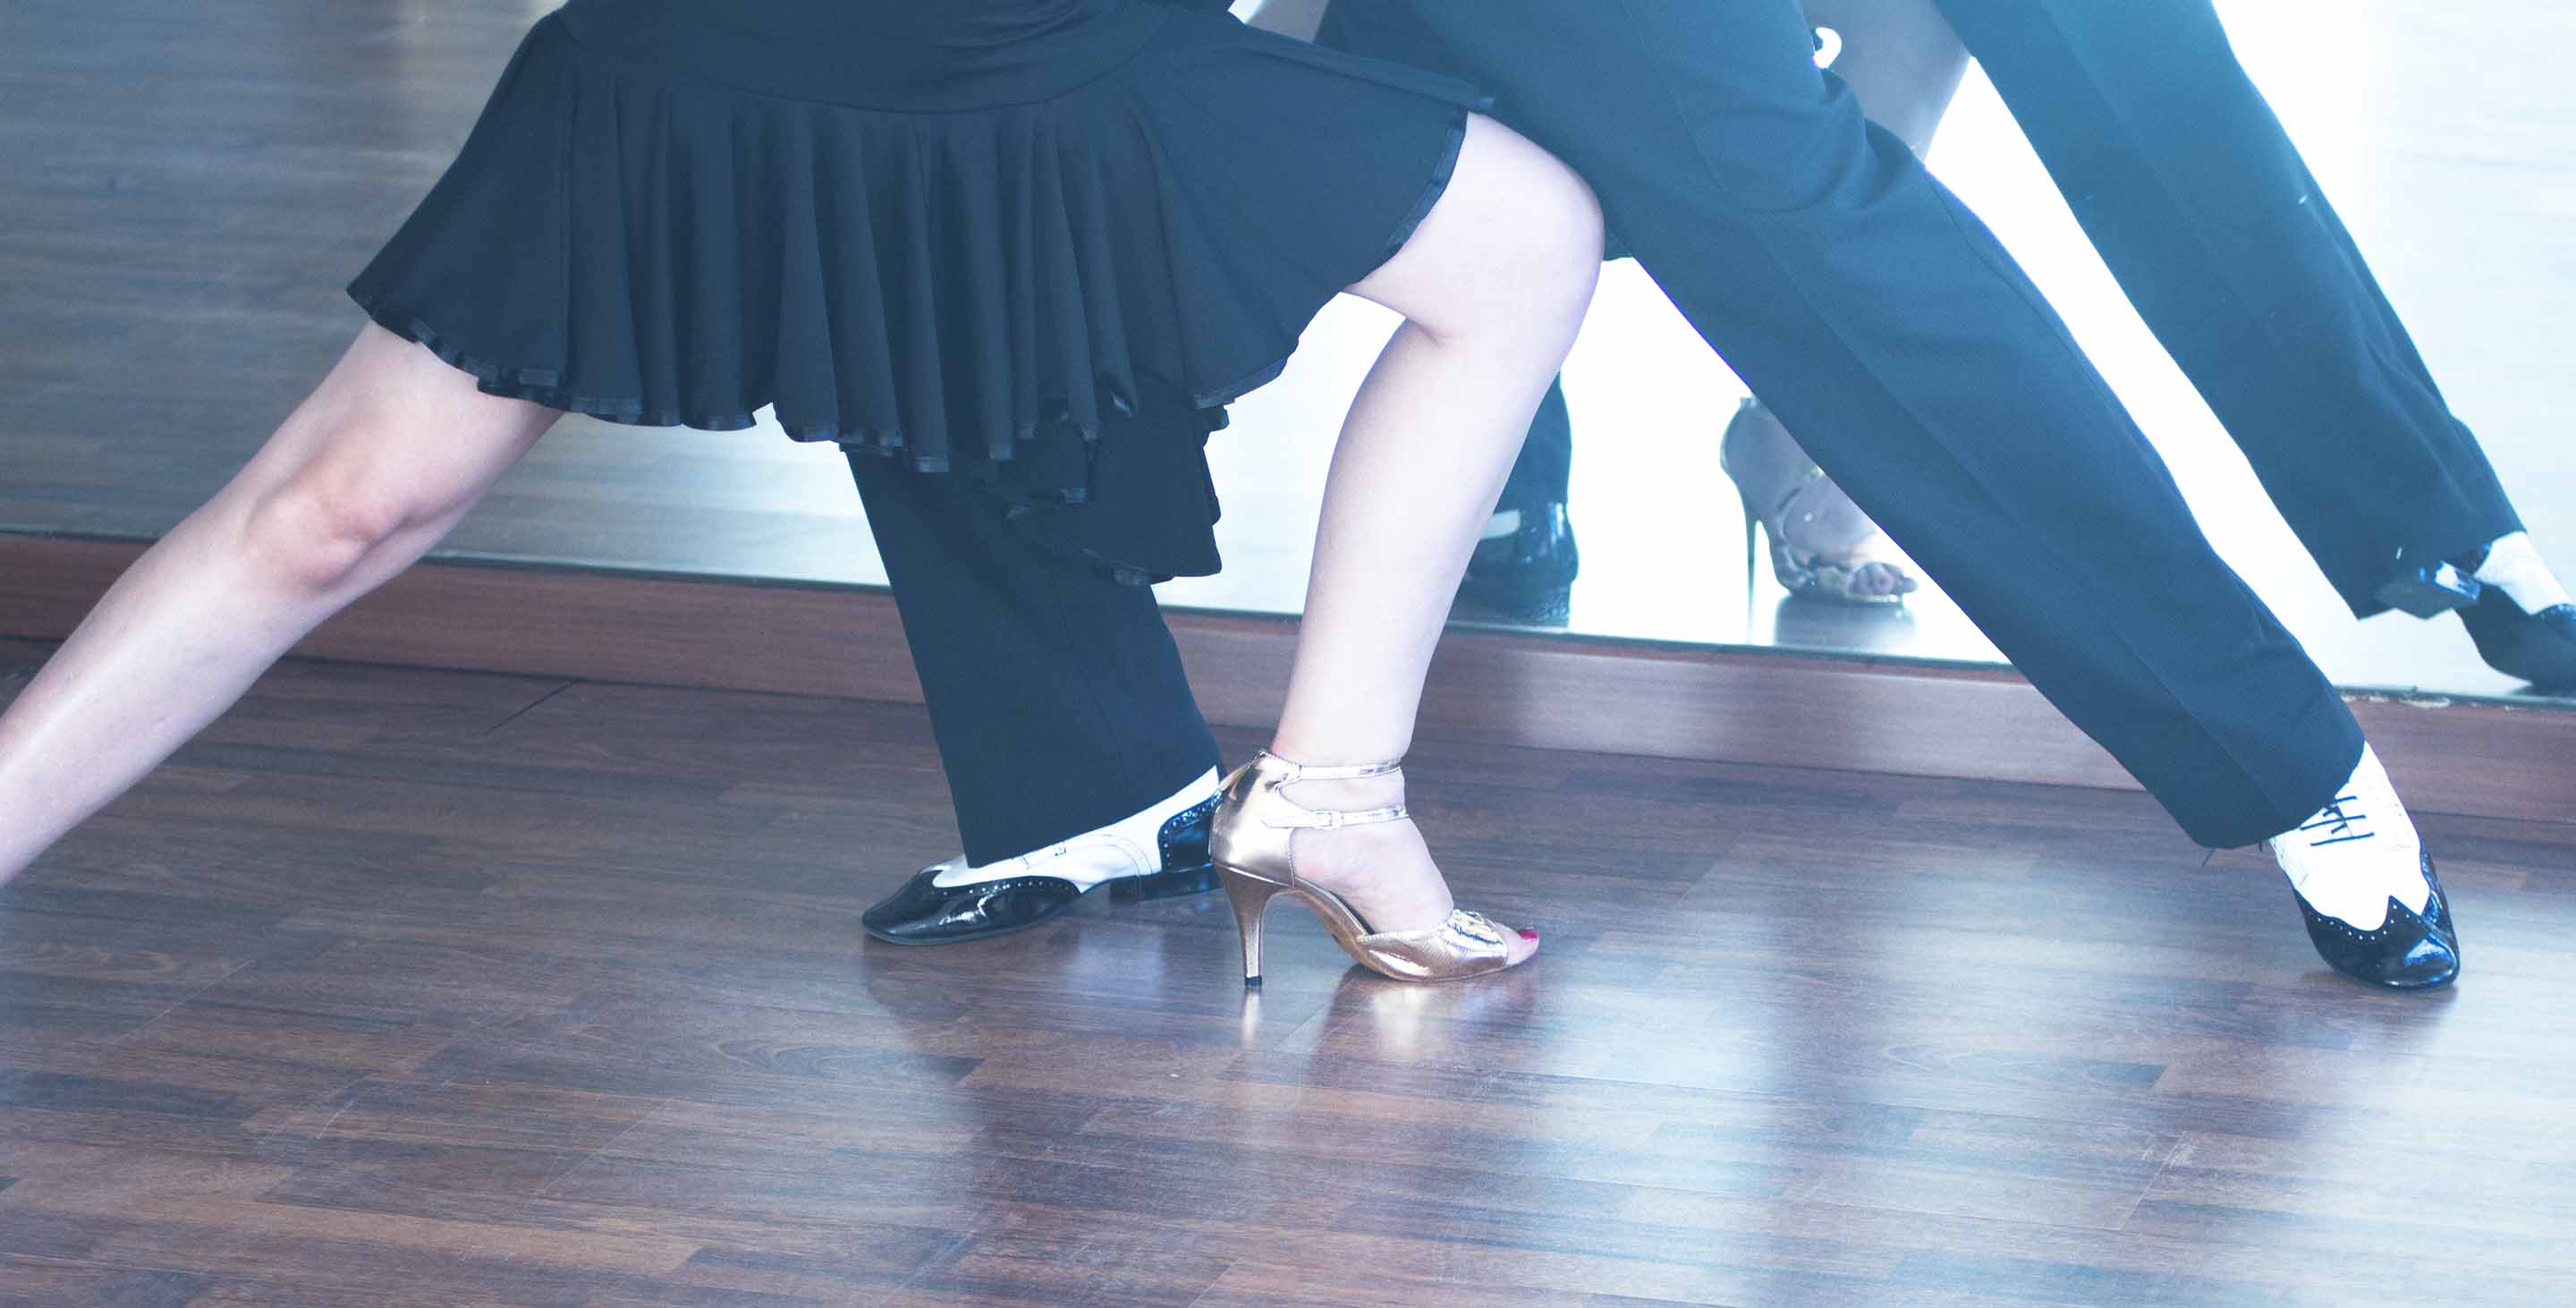 Feet of Dancers